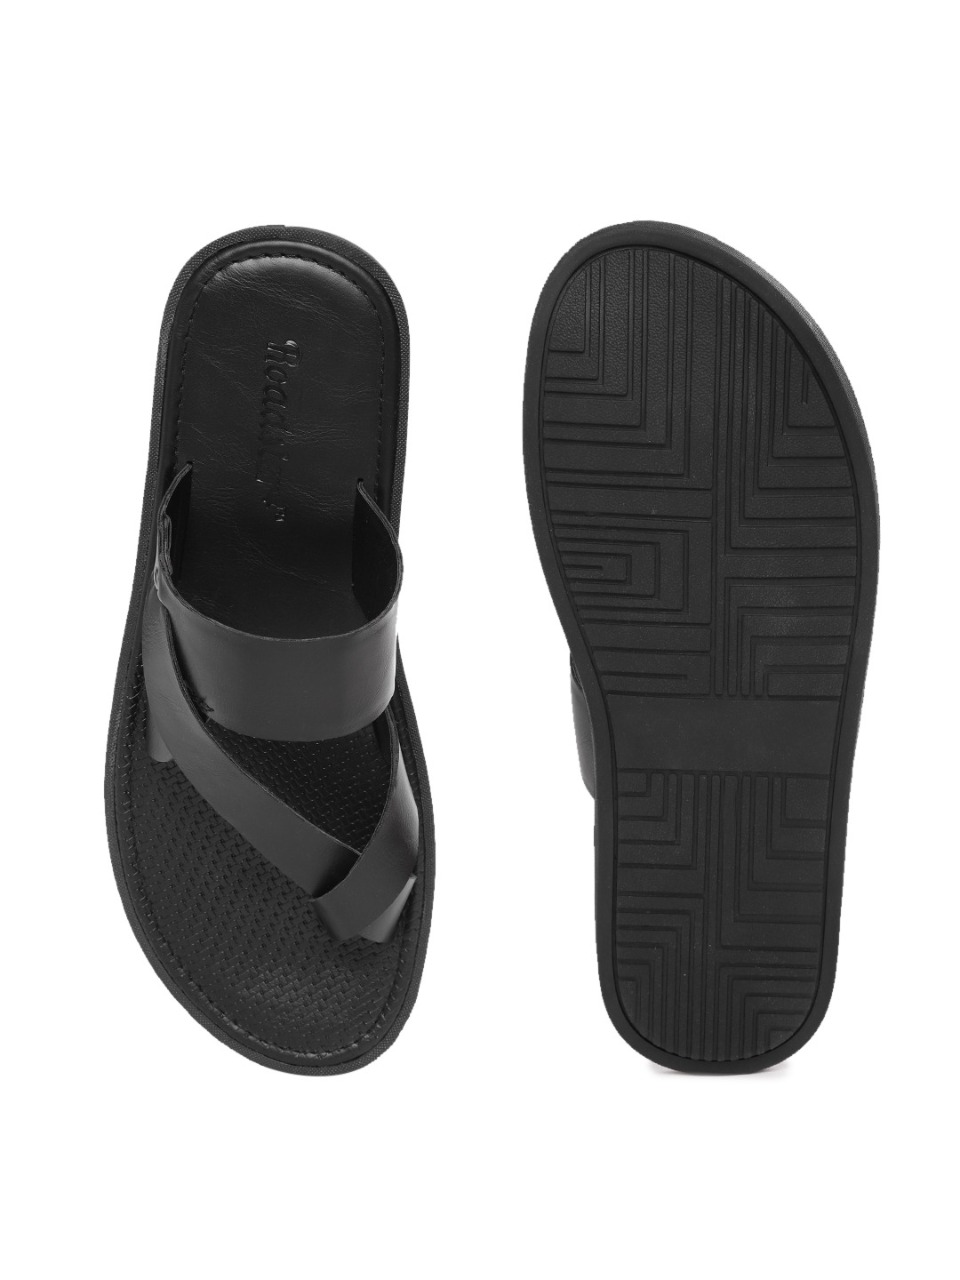 Buy Roadster Men Black Comfort Sandals - Sandals for Men 2434096 | Myntra